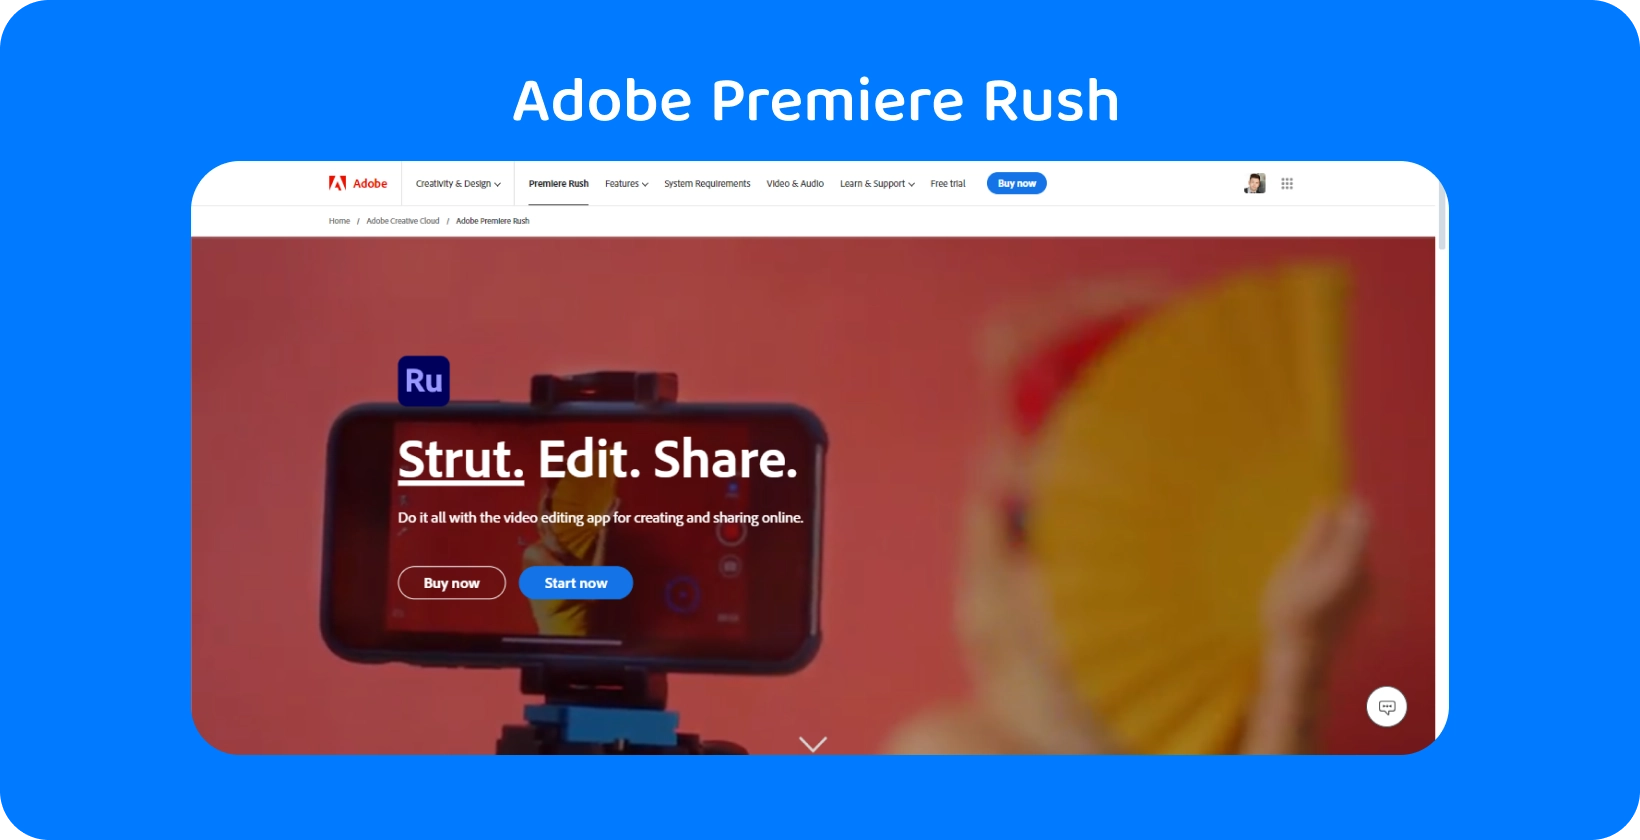 Adobe Premiere Rush na smartfóne namontovanom na statíve so sloganom "Strut. Edit. Share." na úpravu videa.